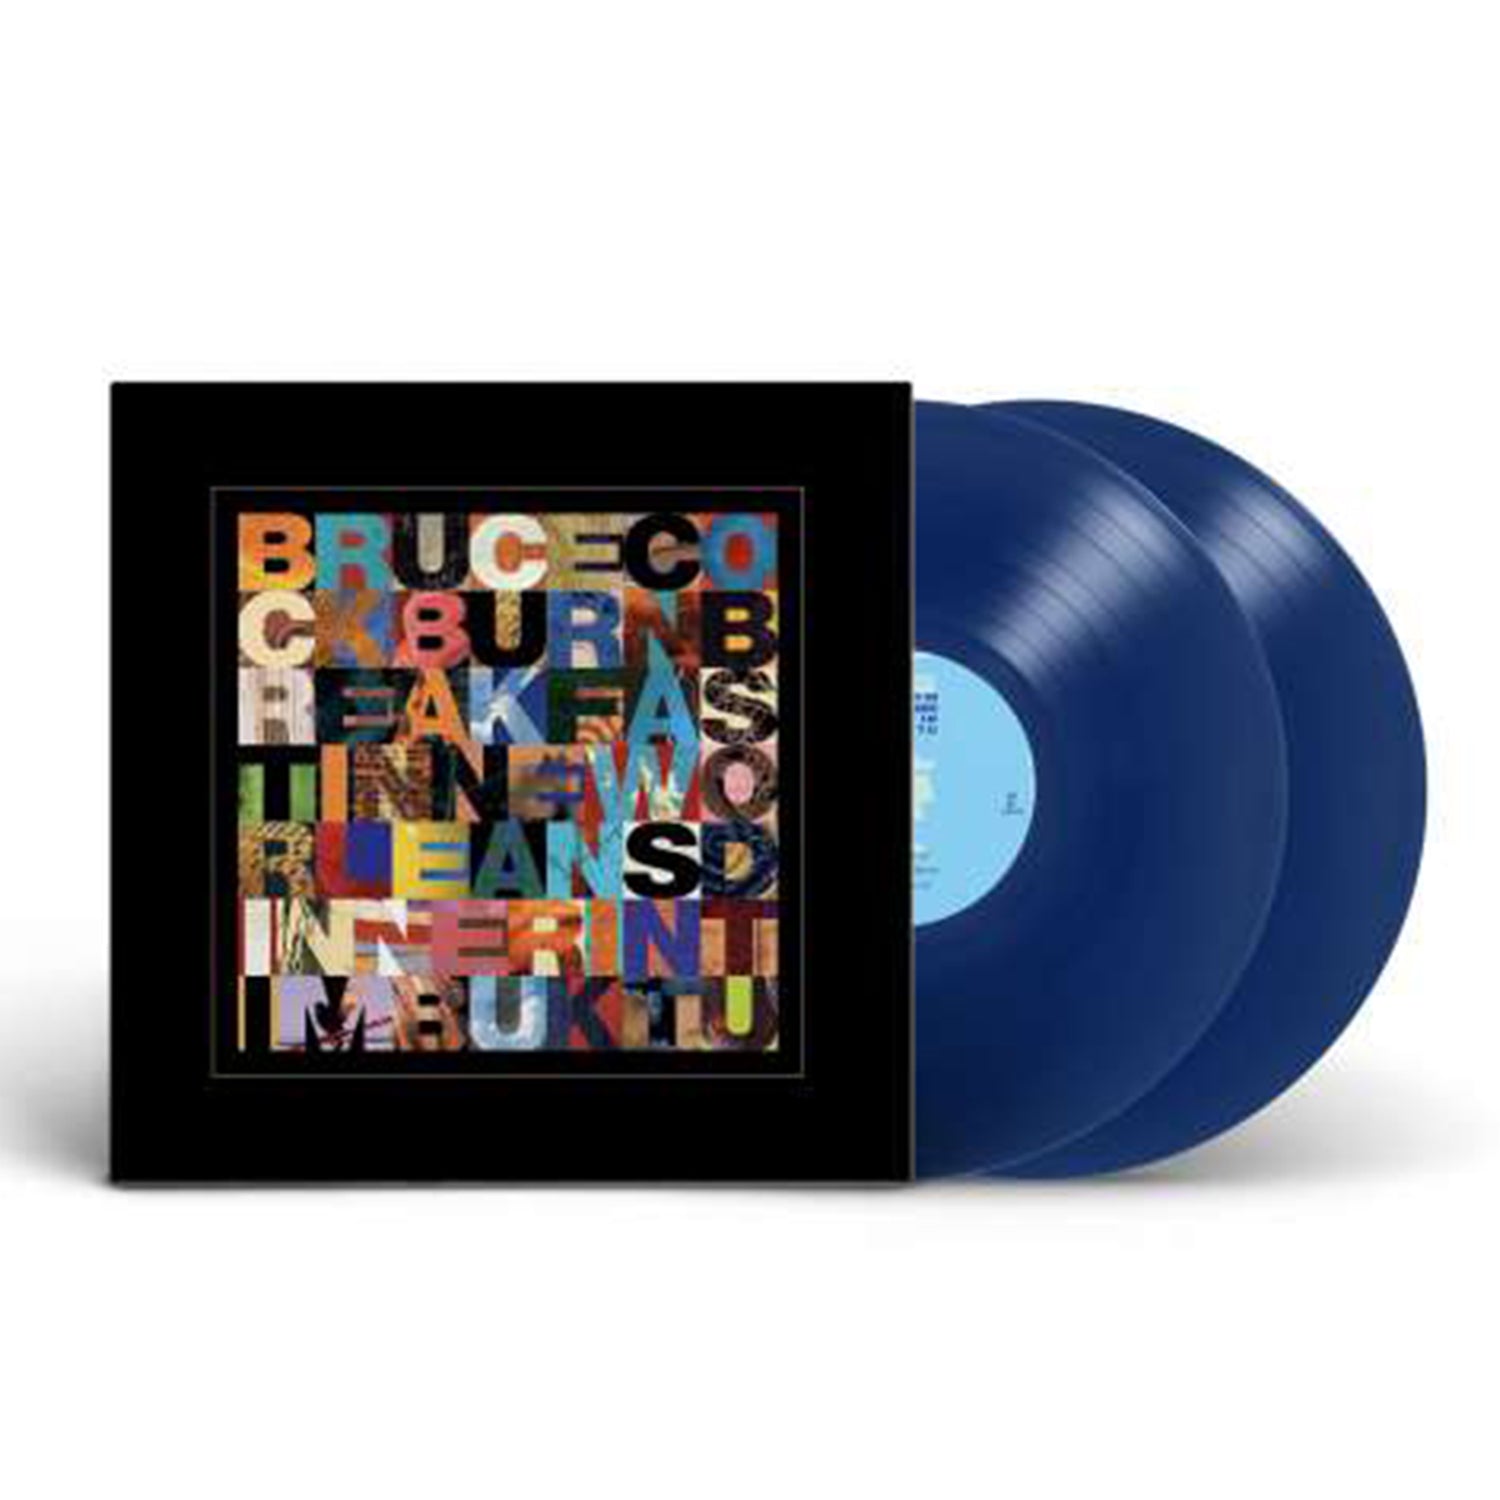 BRUCE COCKBURN - Breakfast in New Orleans Dinner in Timbuktu - 2LP - 180g Blue Vinyl